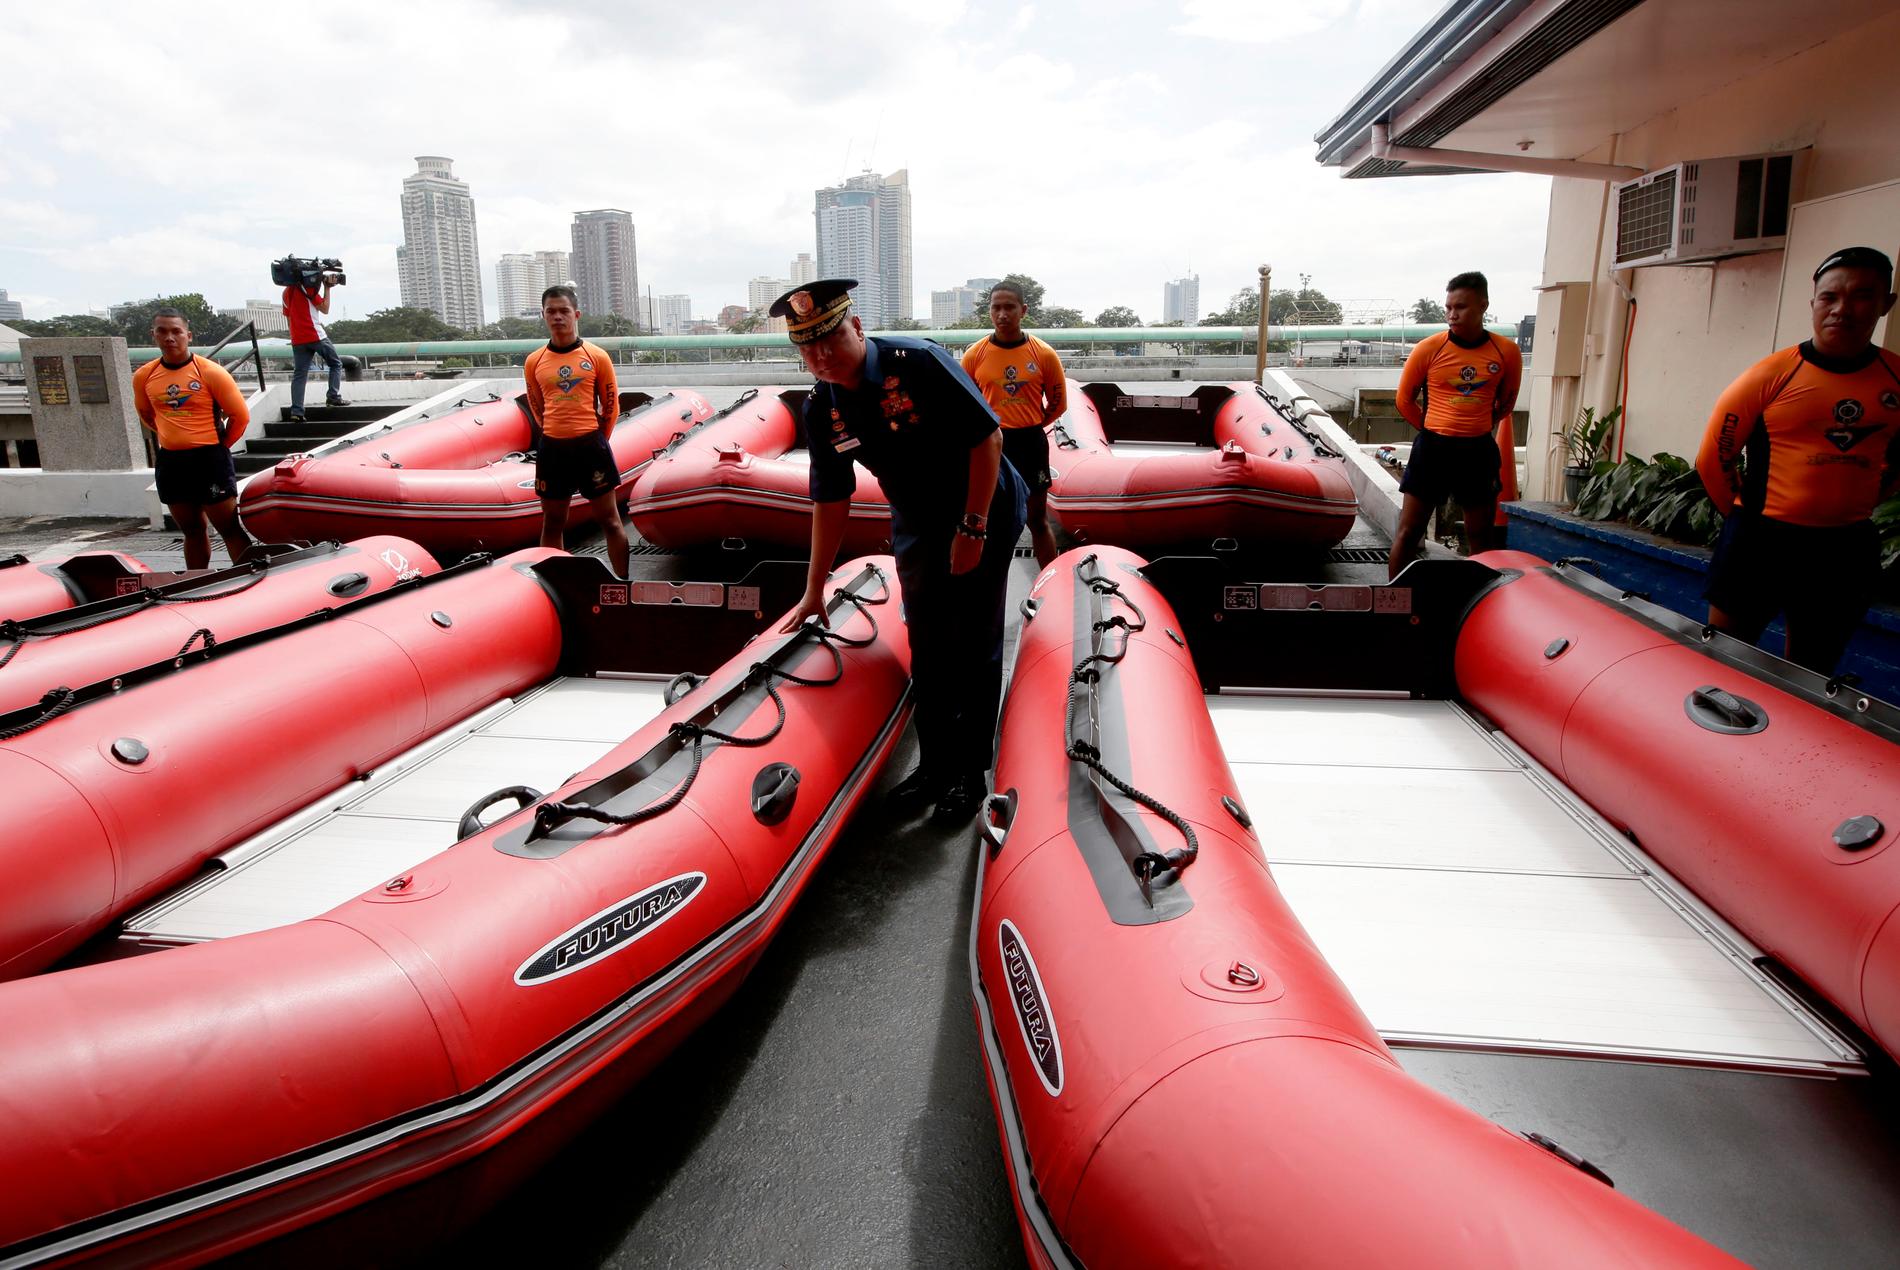 Kustbevakningschefen kontrollerar nya gummibåtar i Manila.